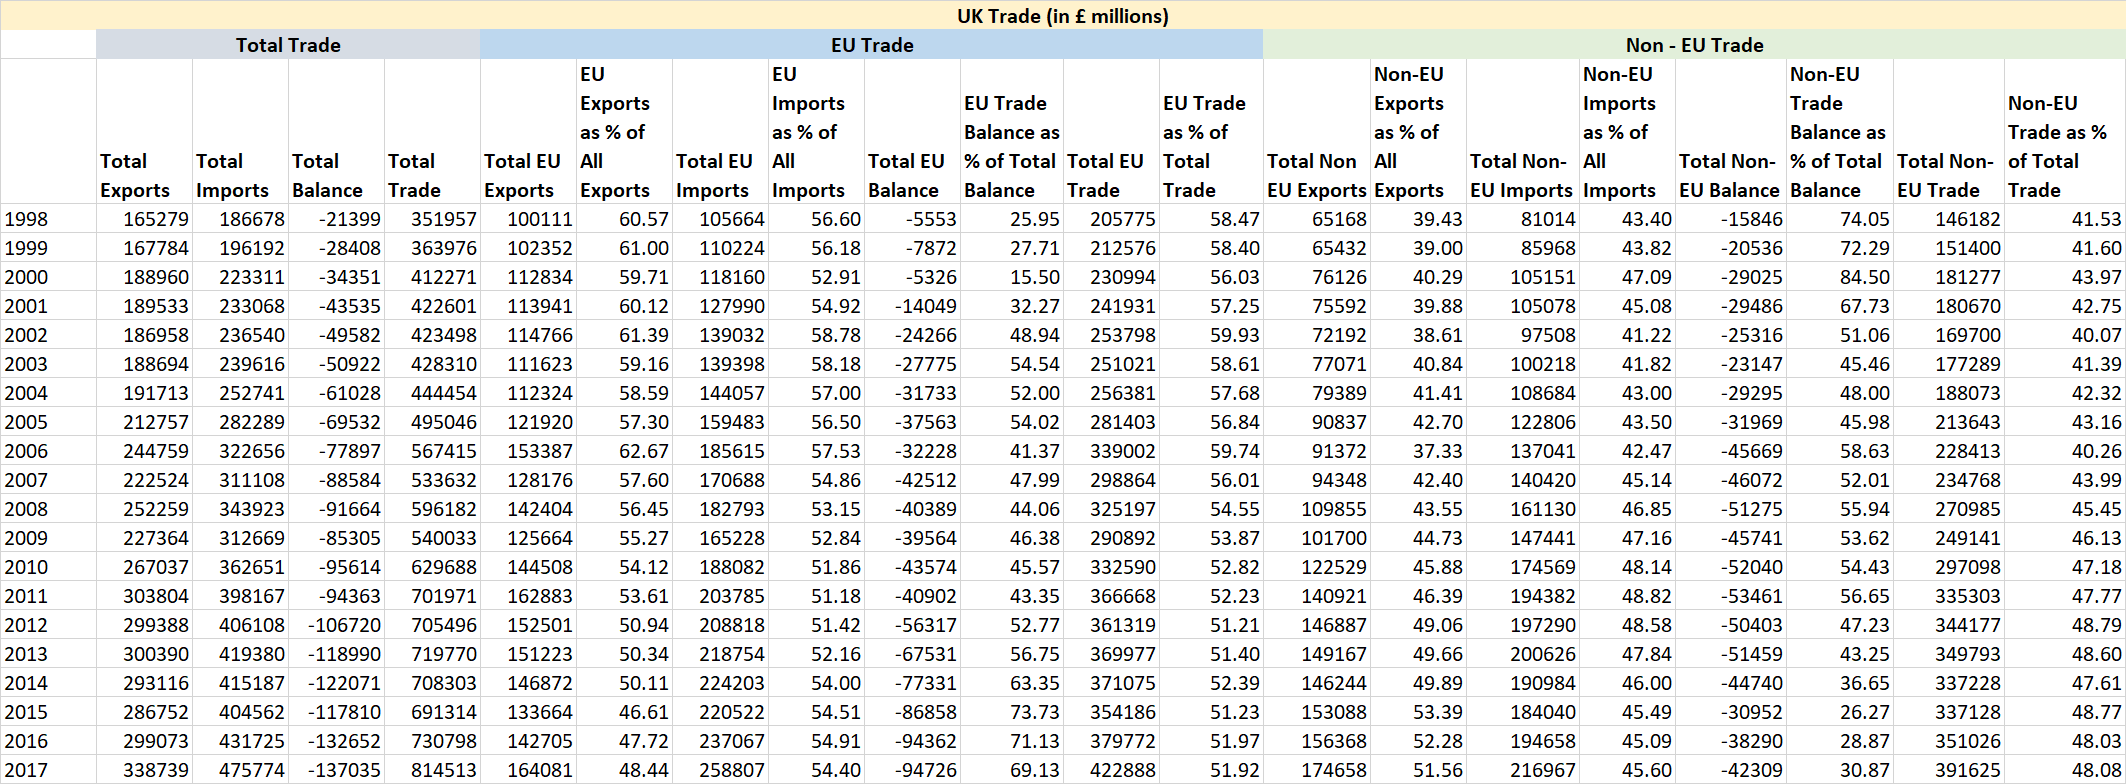 UK trade statistics 1998 to 2017 table